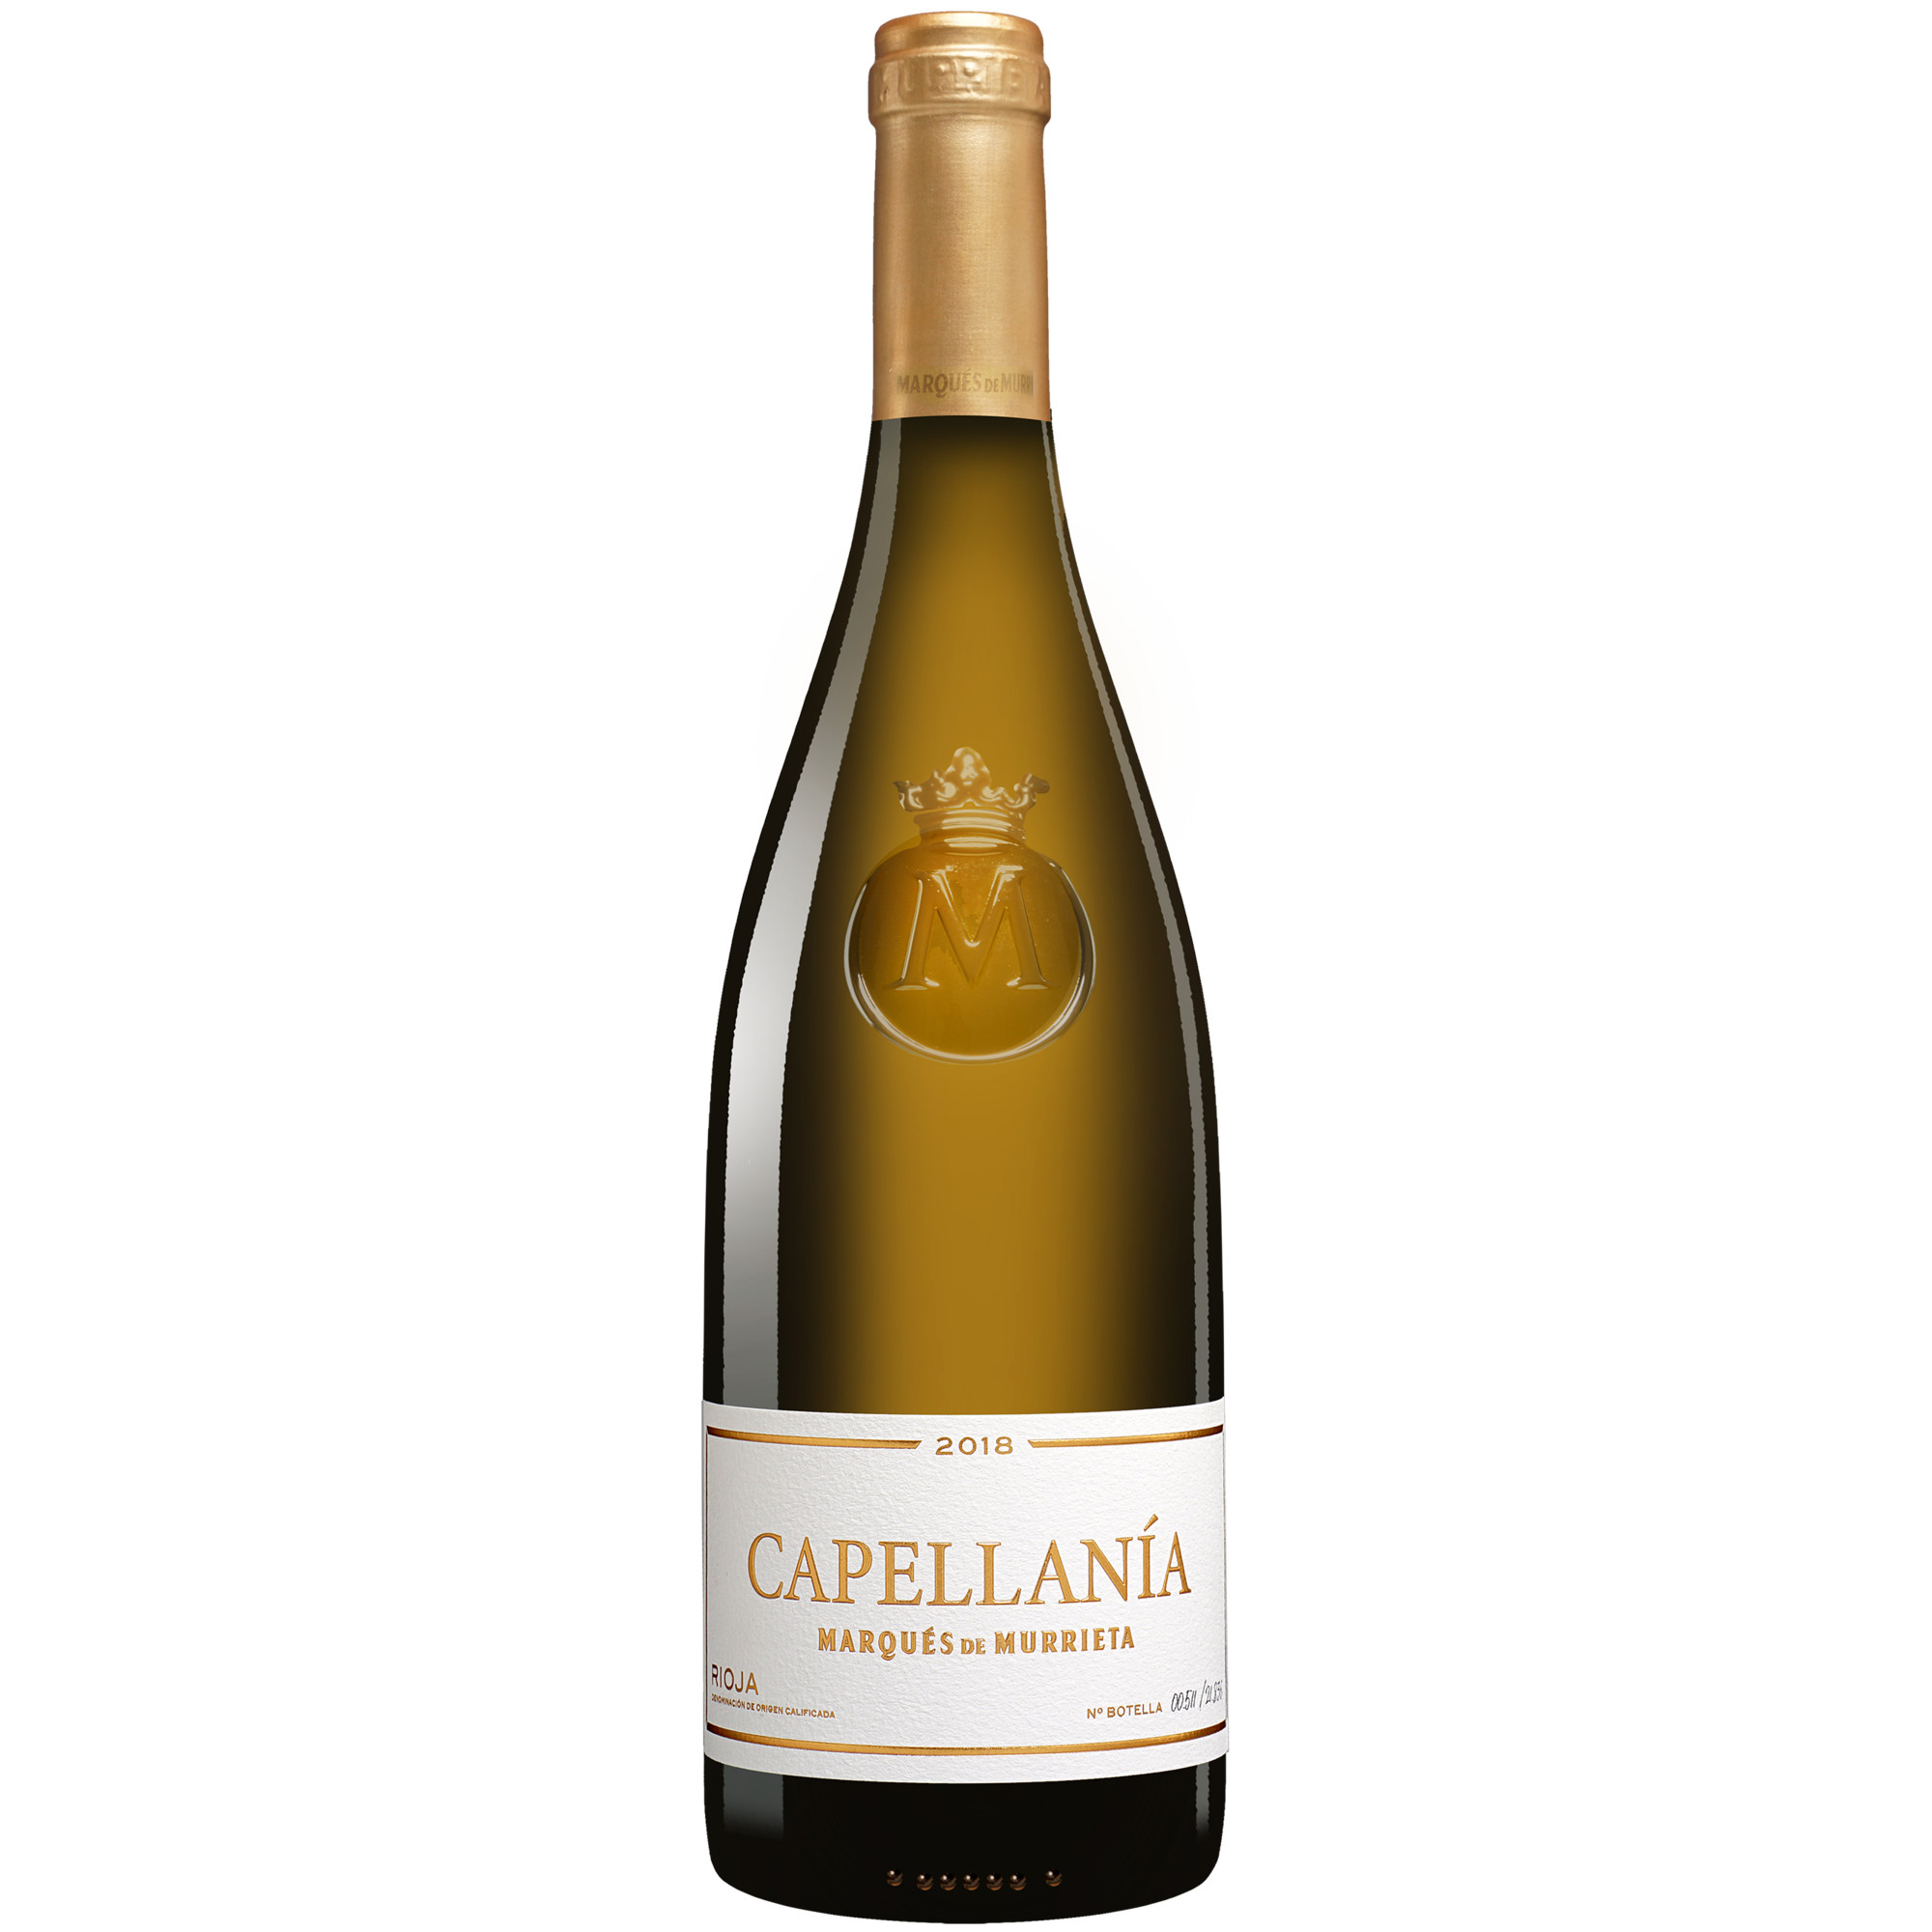 Marqués de Murrieta Blanco »Capellanía« Reserva 2018  014% Vol. Weißwein Trocken aus Spanien